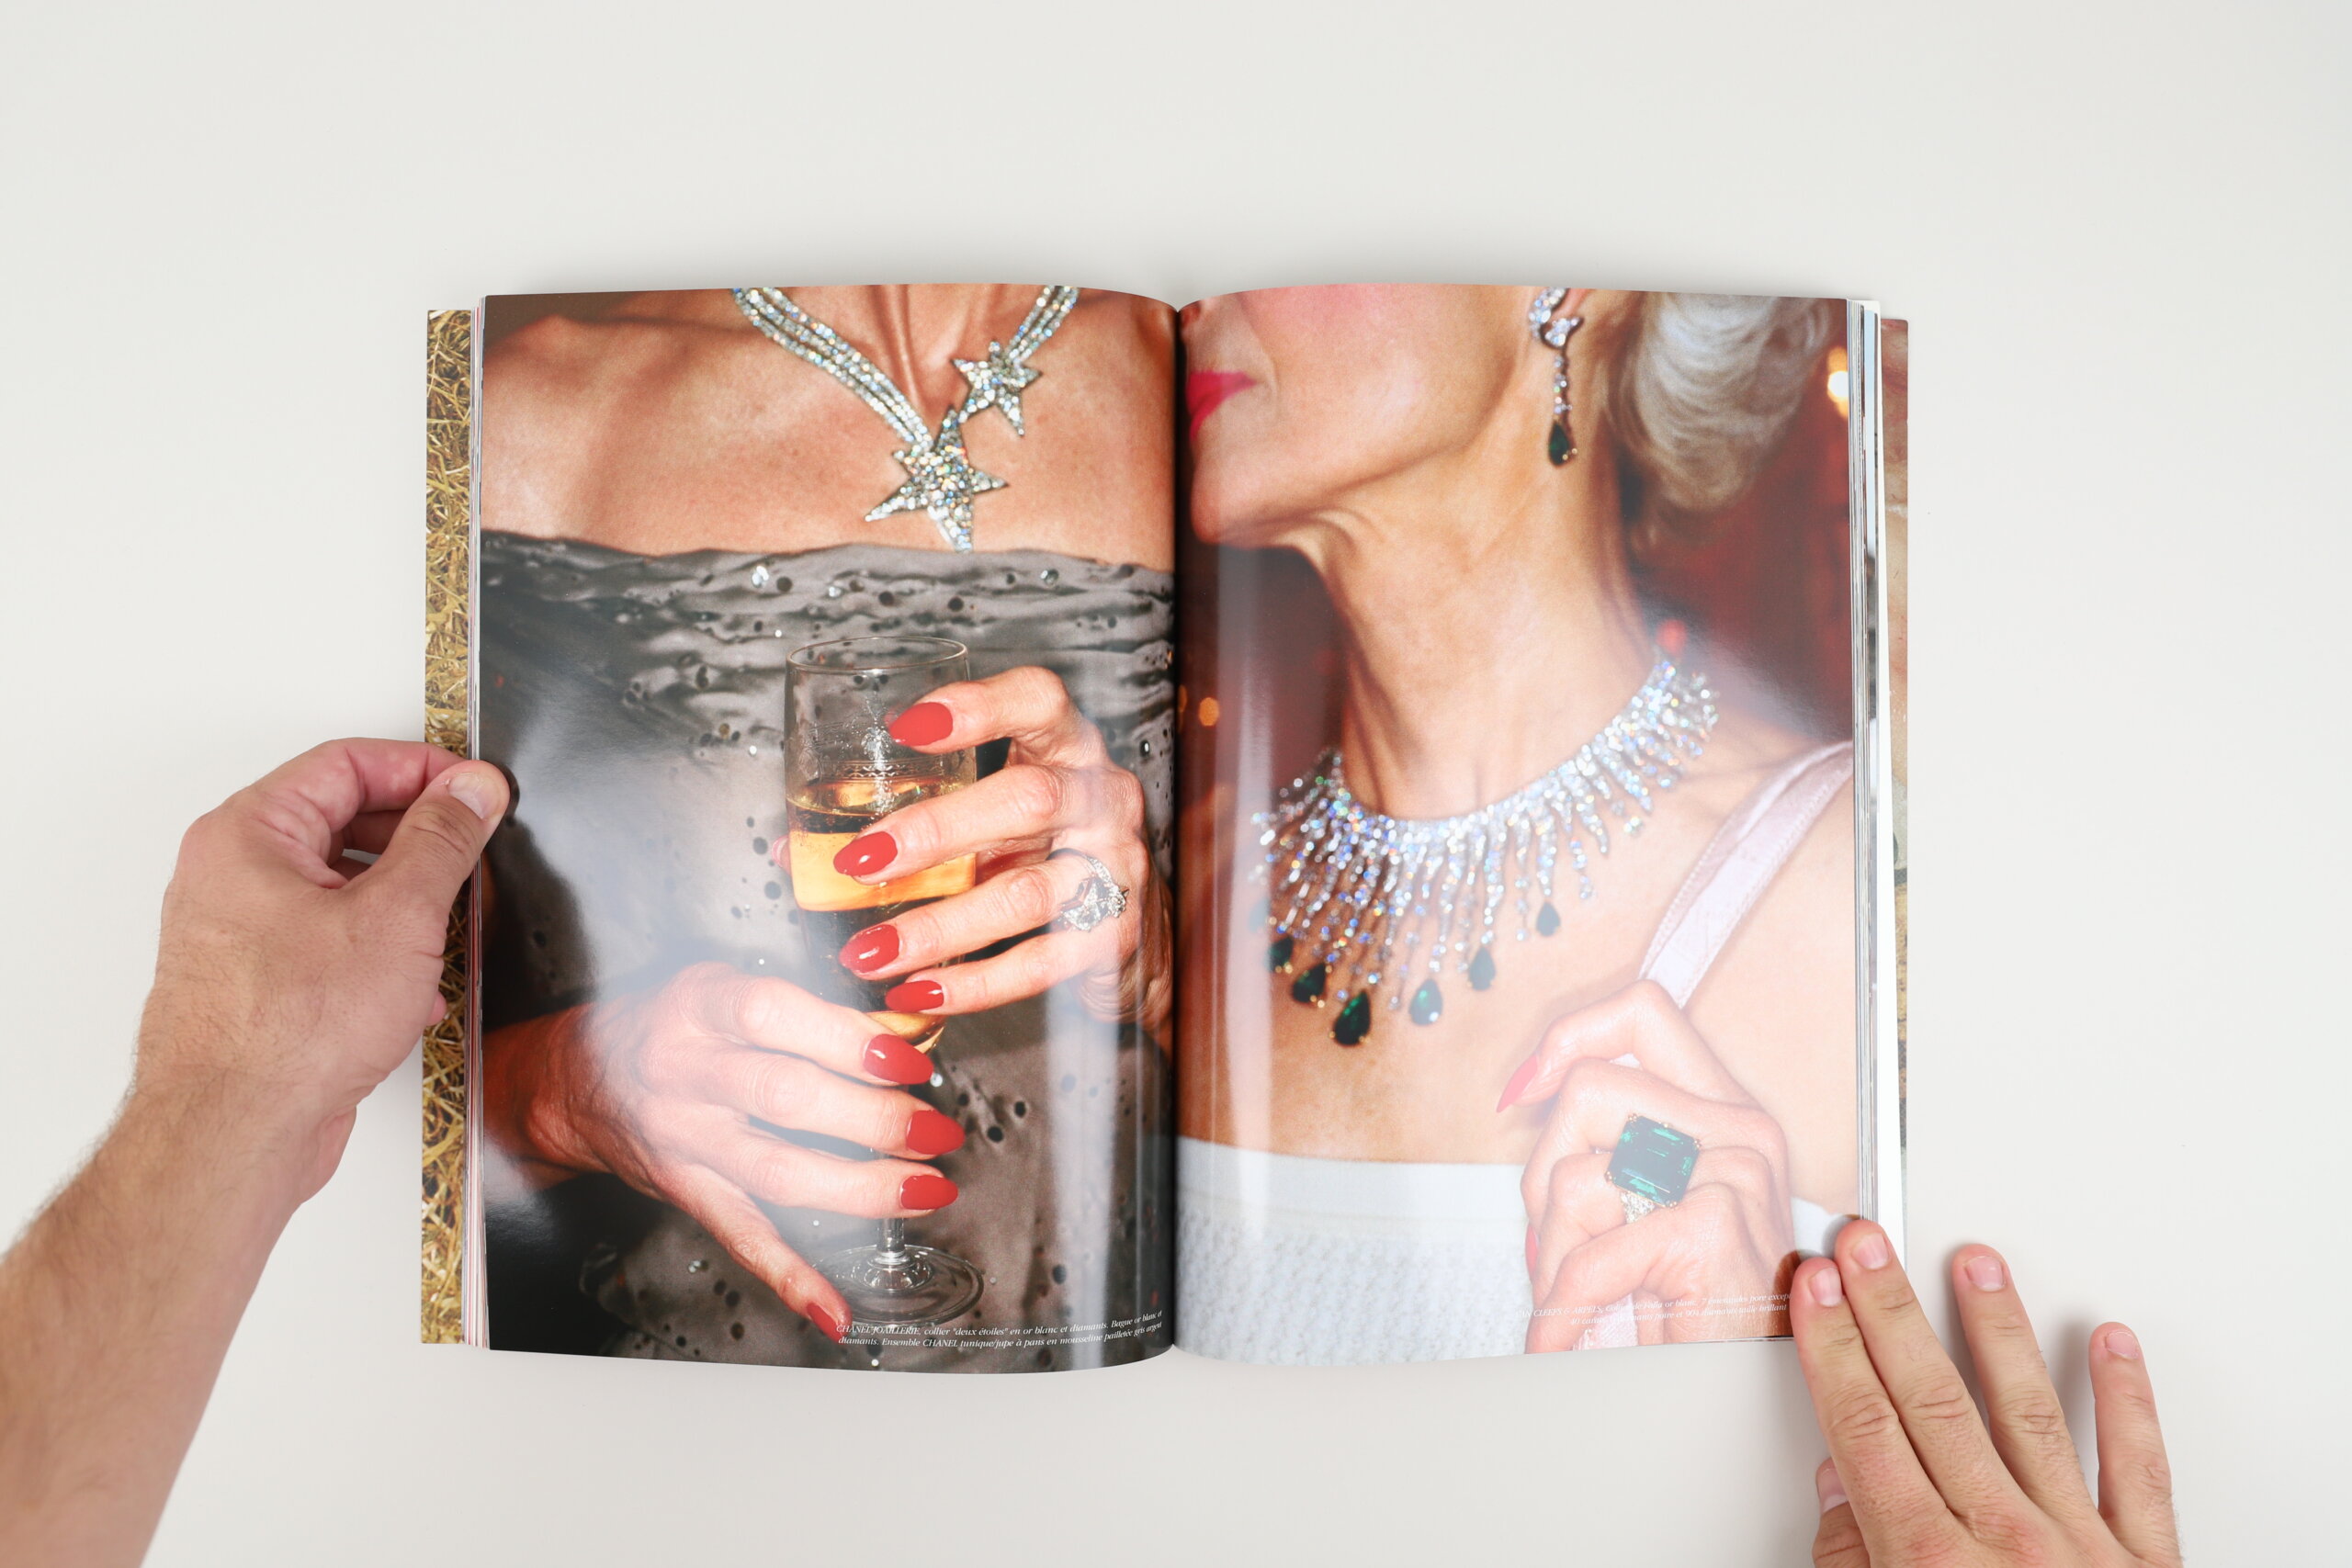 Fashion-magazine-martin-parr-magnum-visuel-2